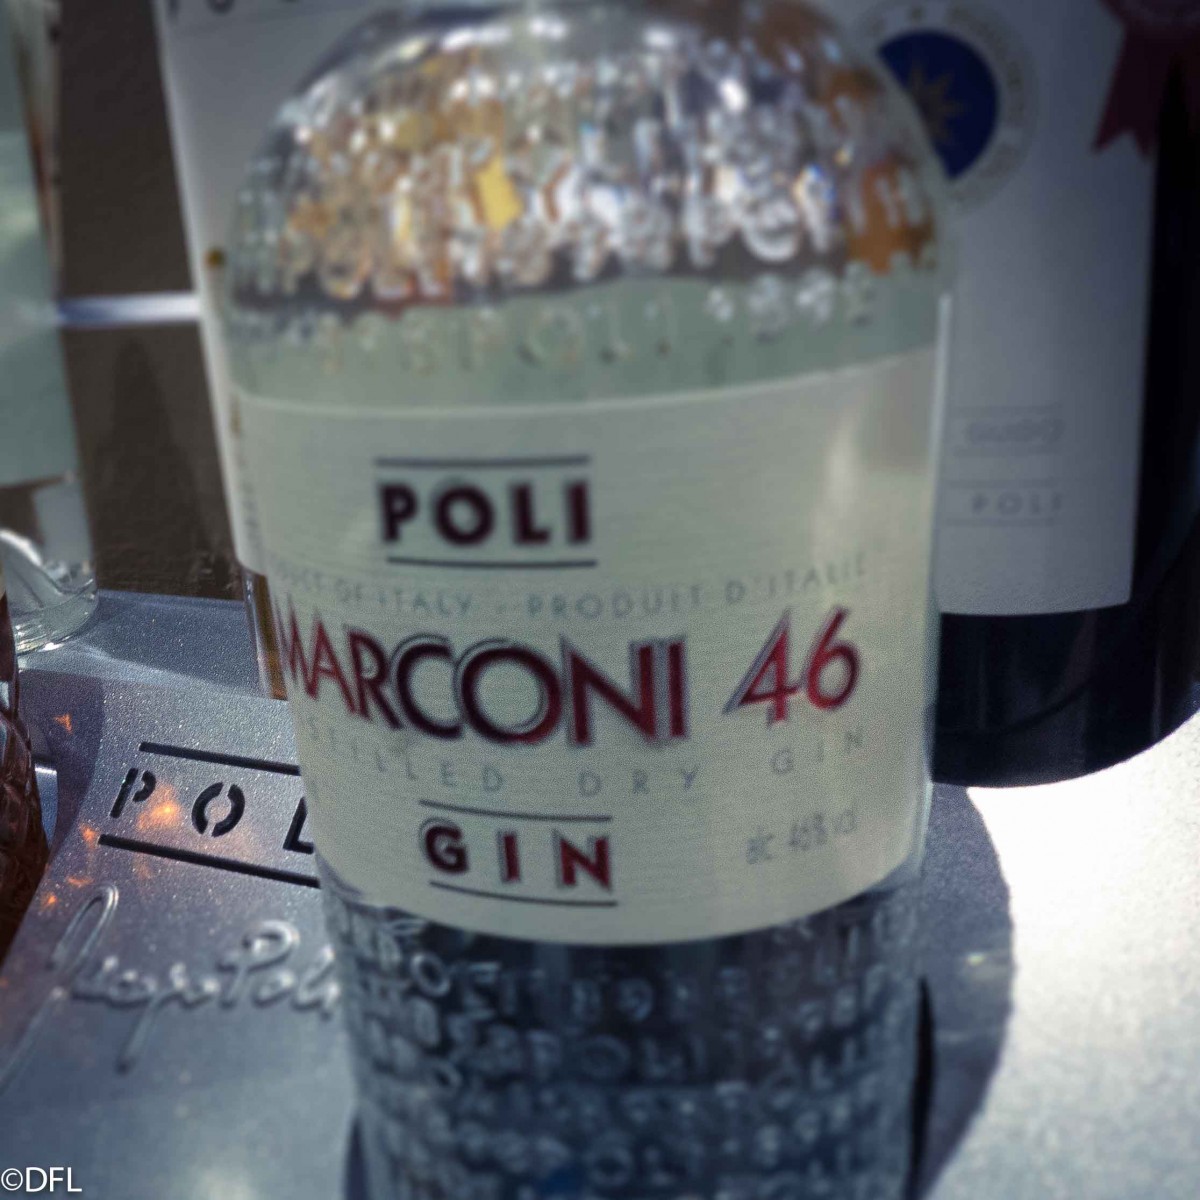 Poli Marconi 46 gin Italy